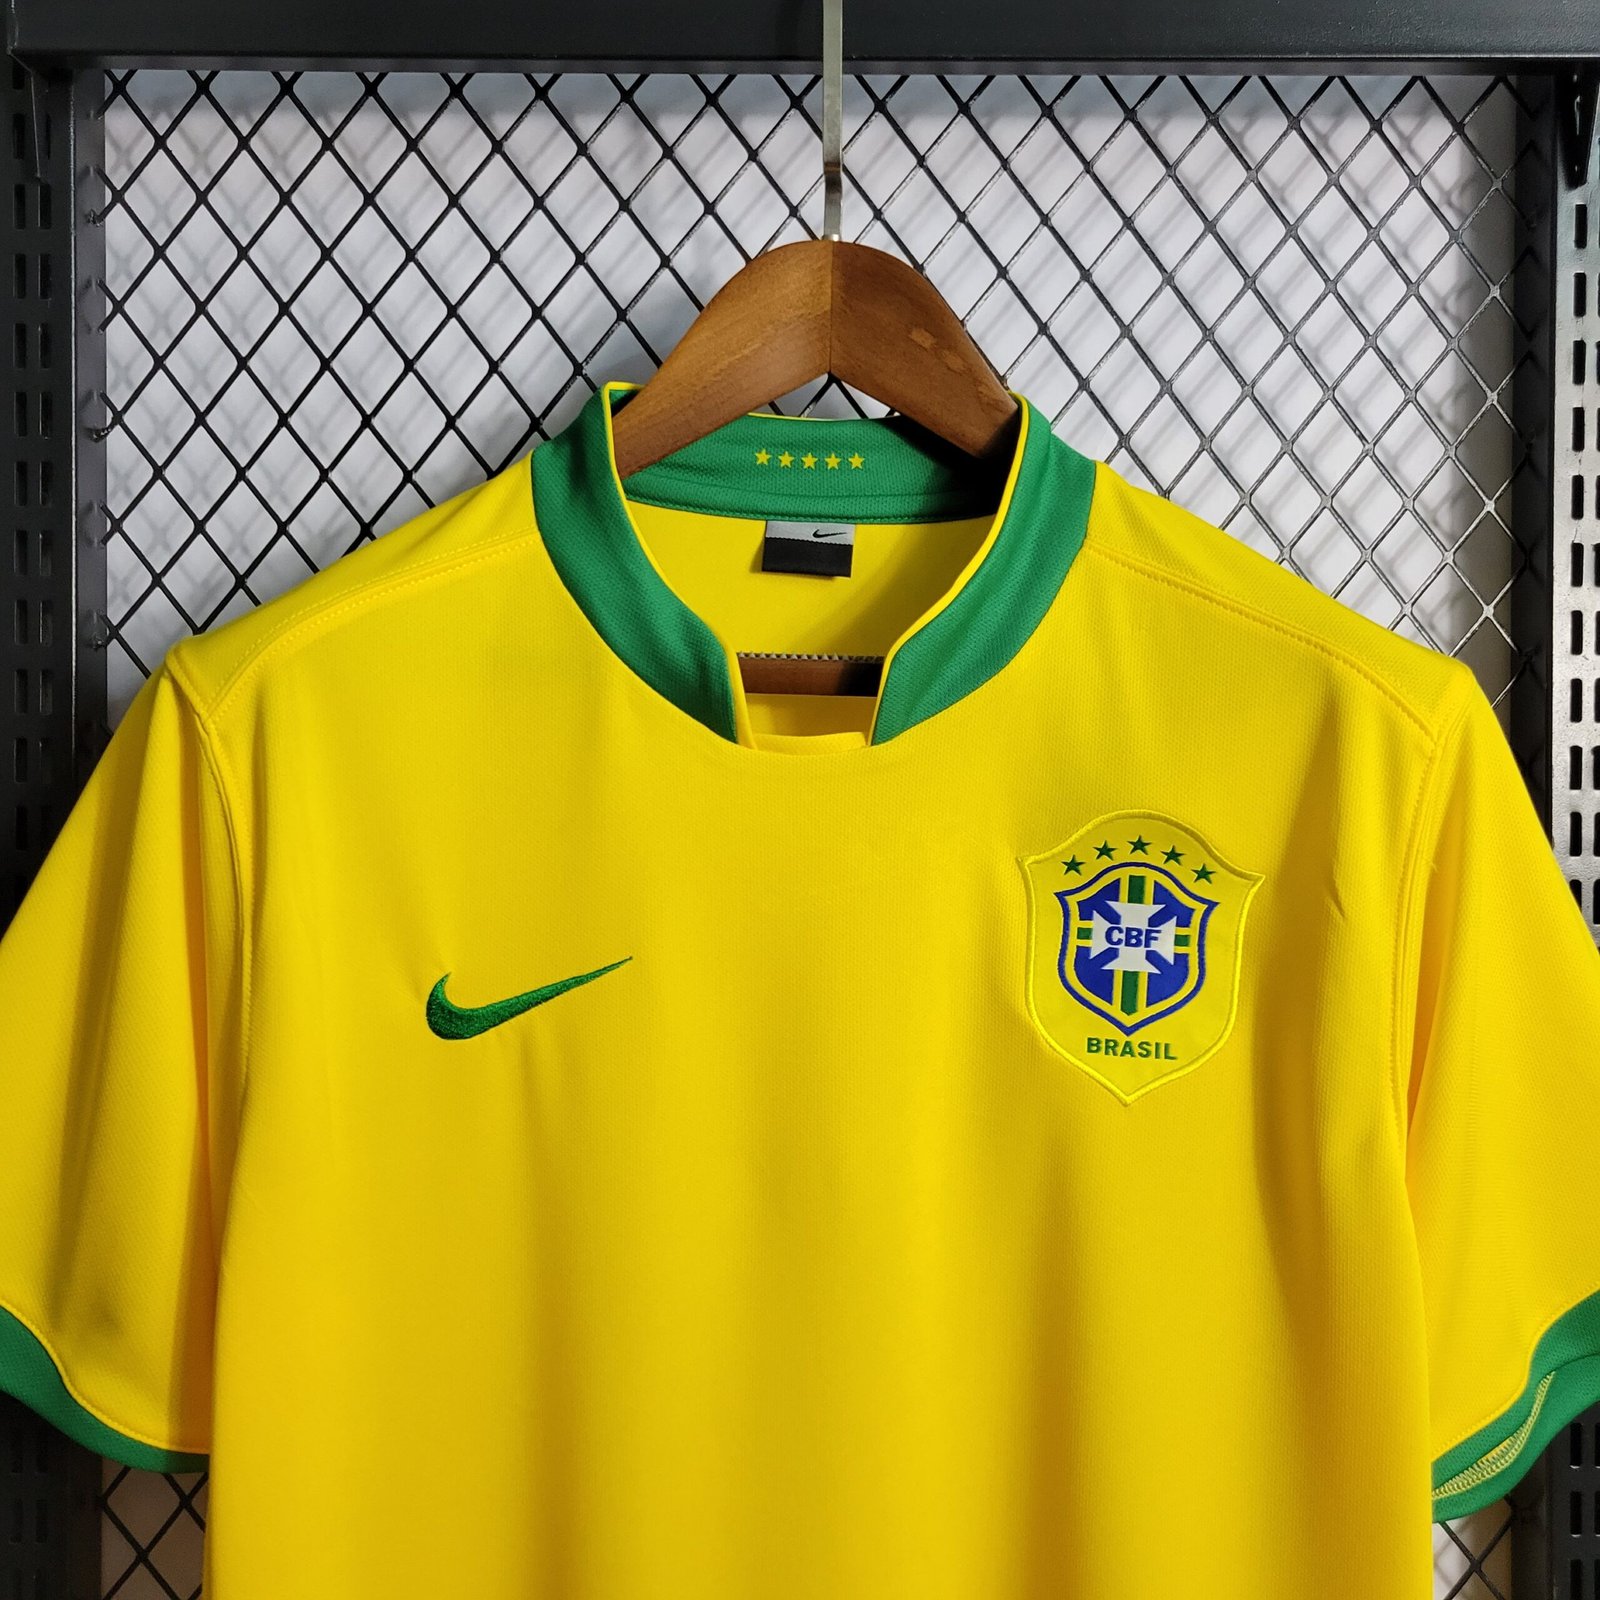 https://kssports23.com.br/wp-content/uploads/2022/08/camisa-brasil-home-2006-versao-torcedor-retro-2-scaled.jpg